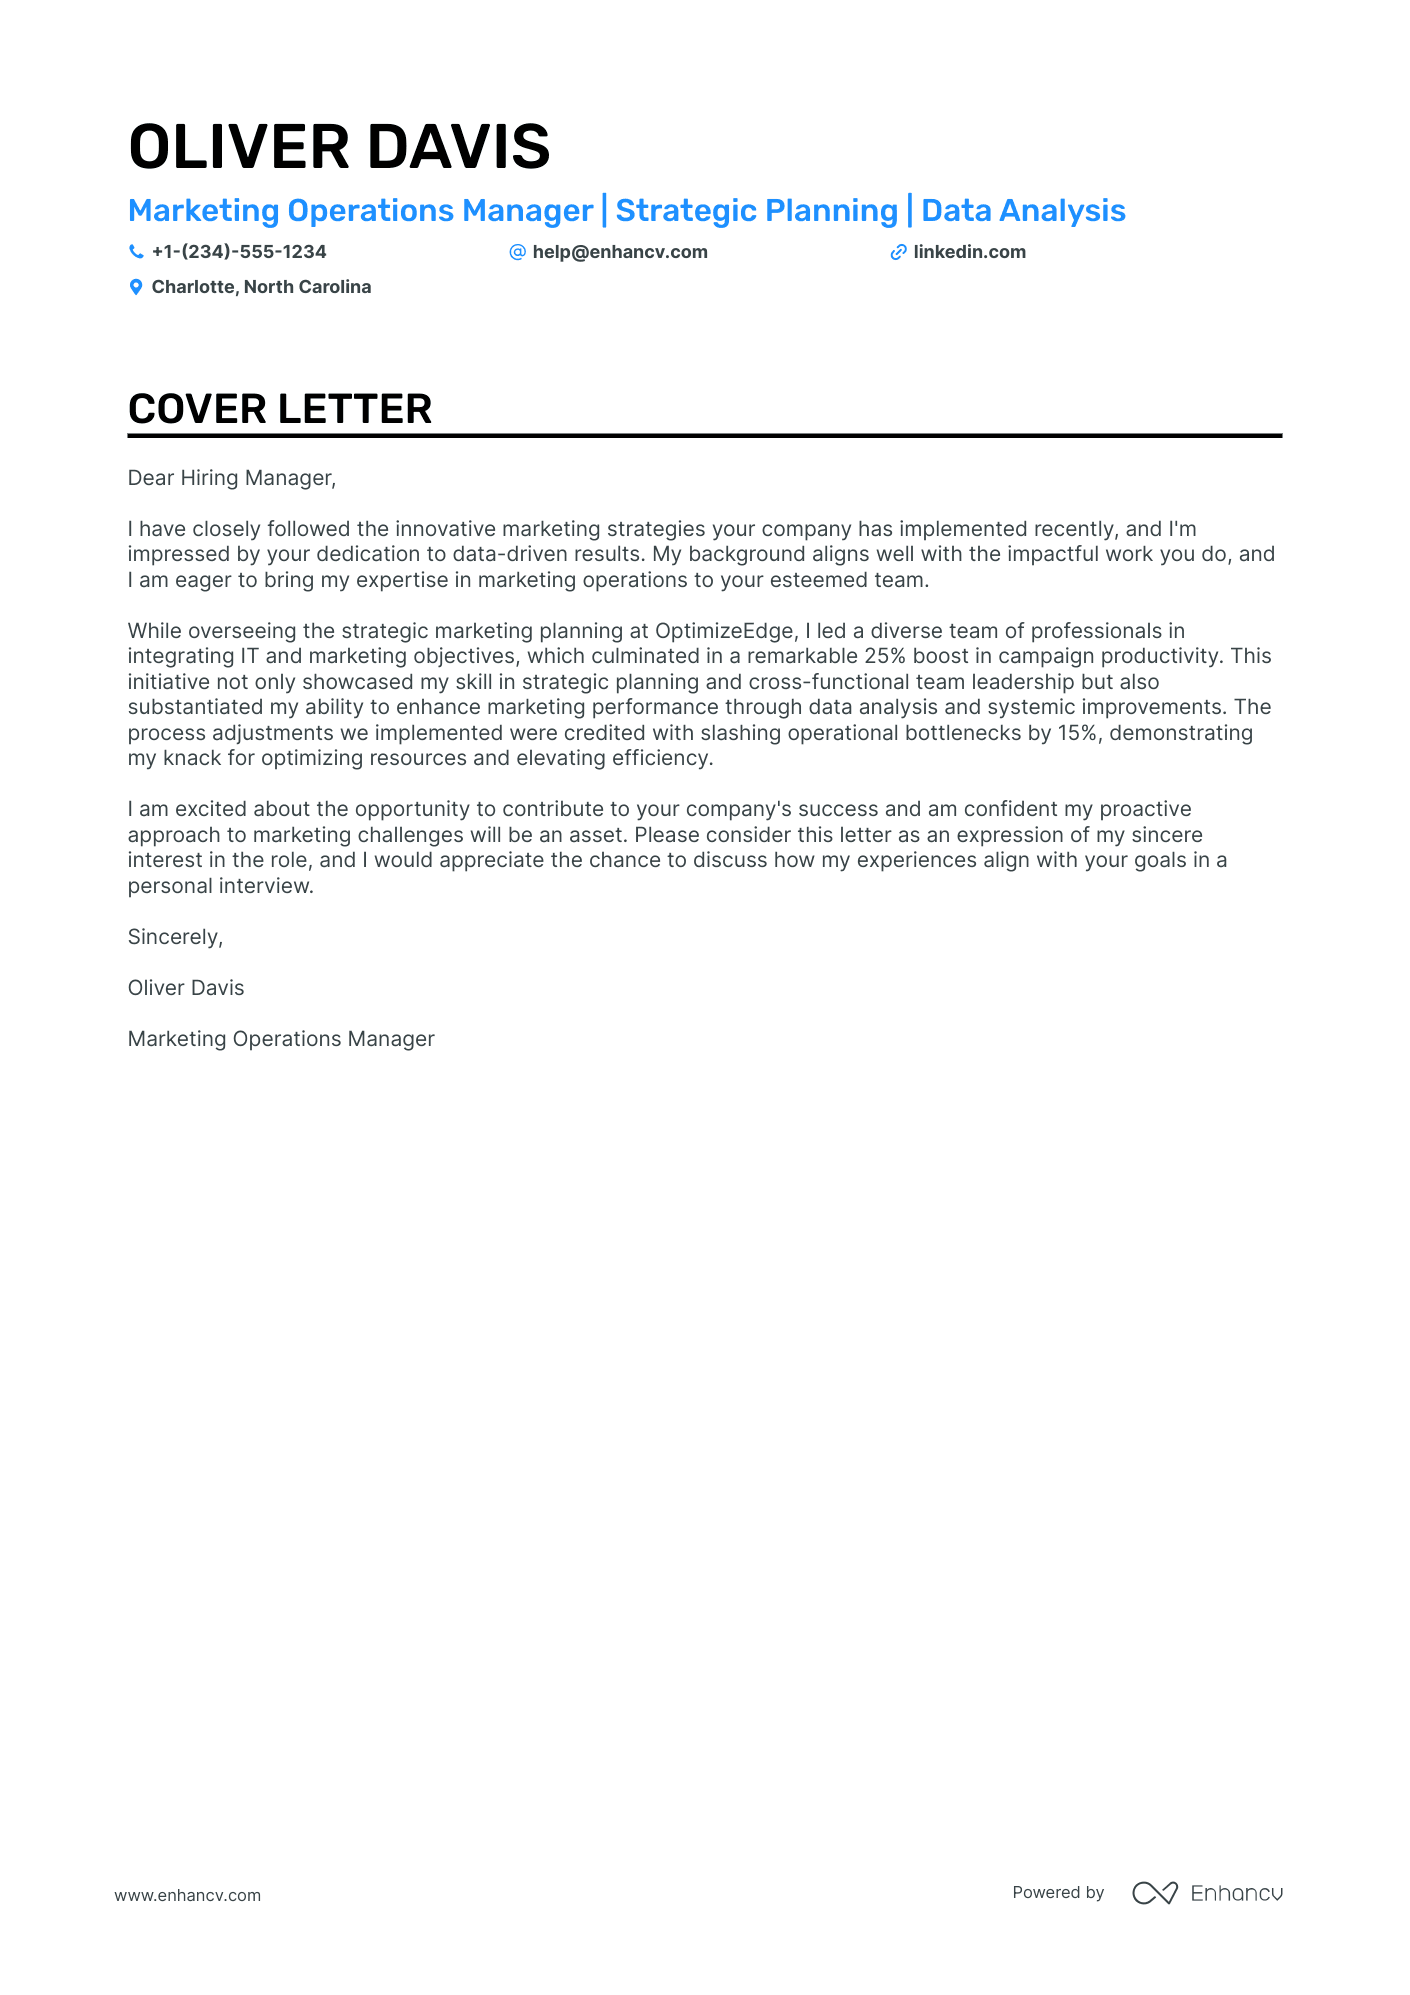 marketing management cover letter sample